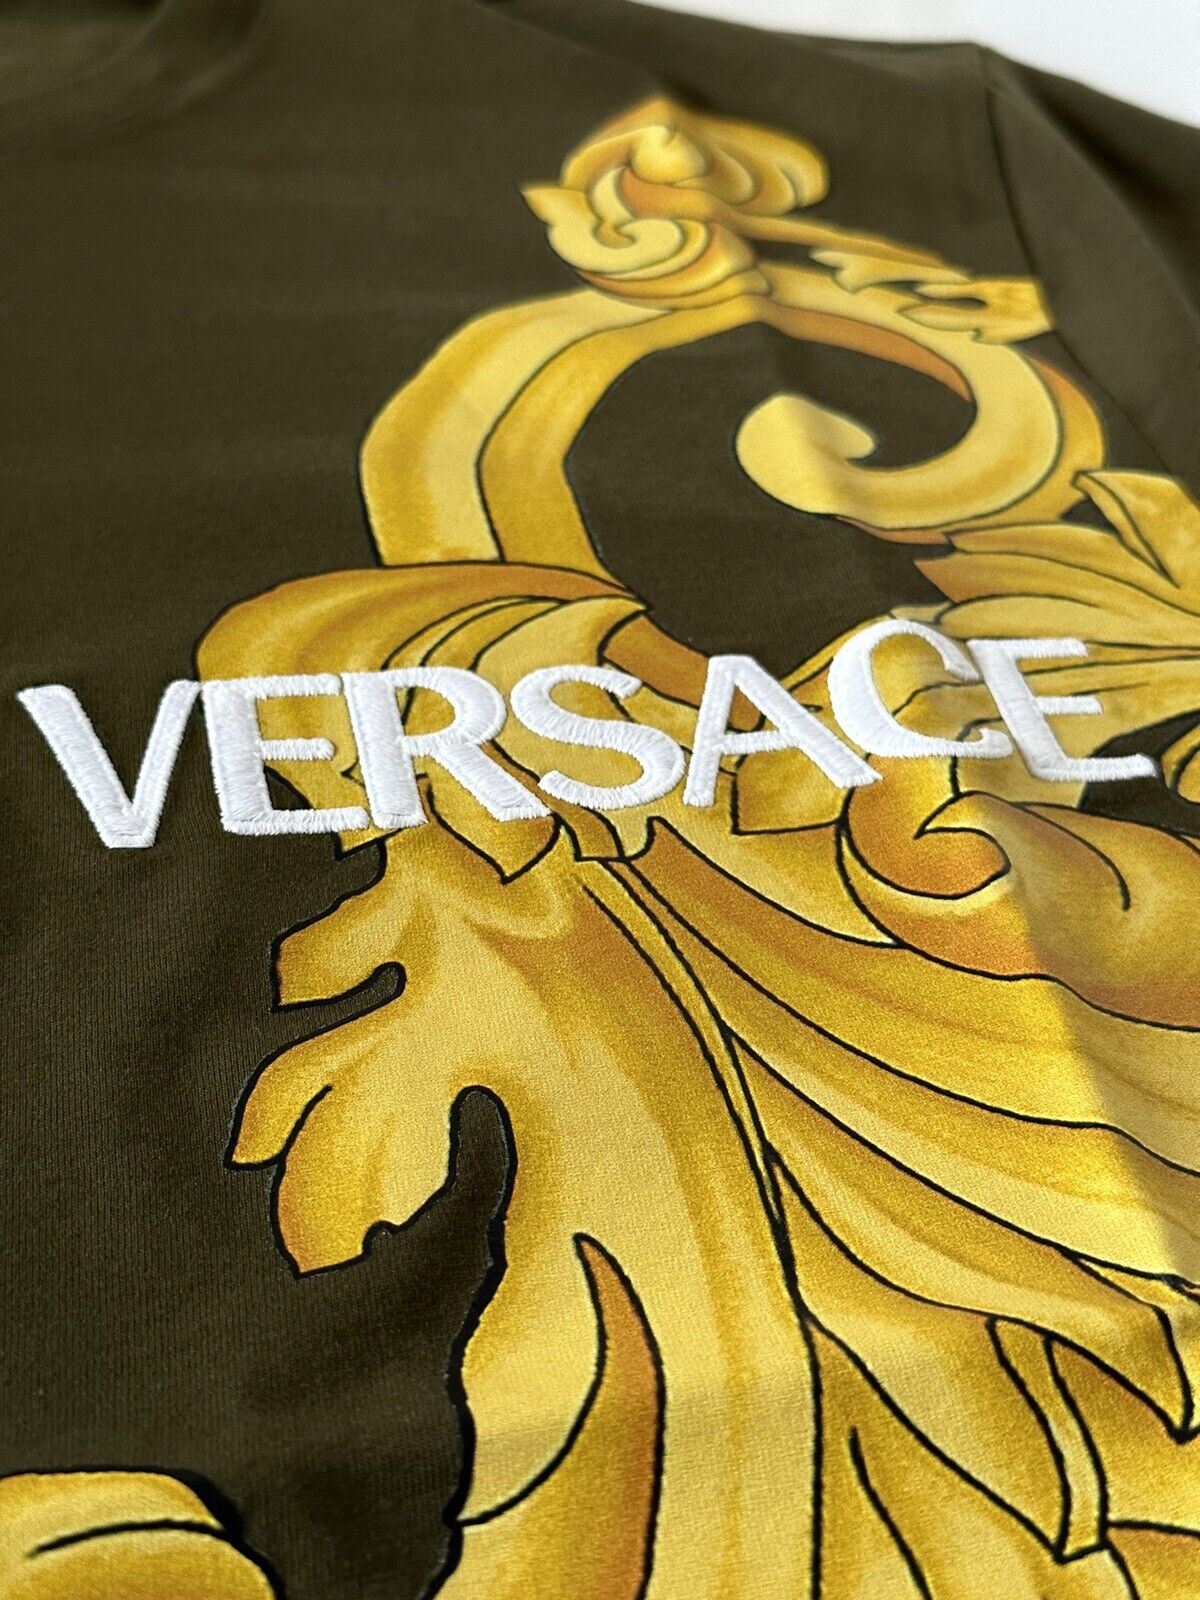 NWT Versace Футболка из джерси цвета хаки с вышитым логотипом Versace, 2XL 1008280